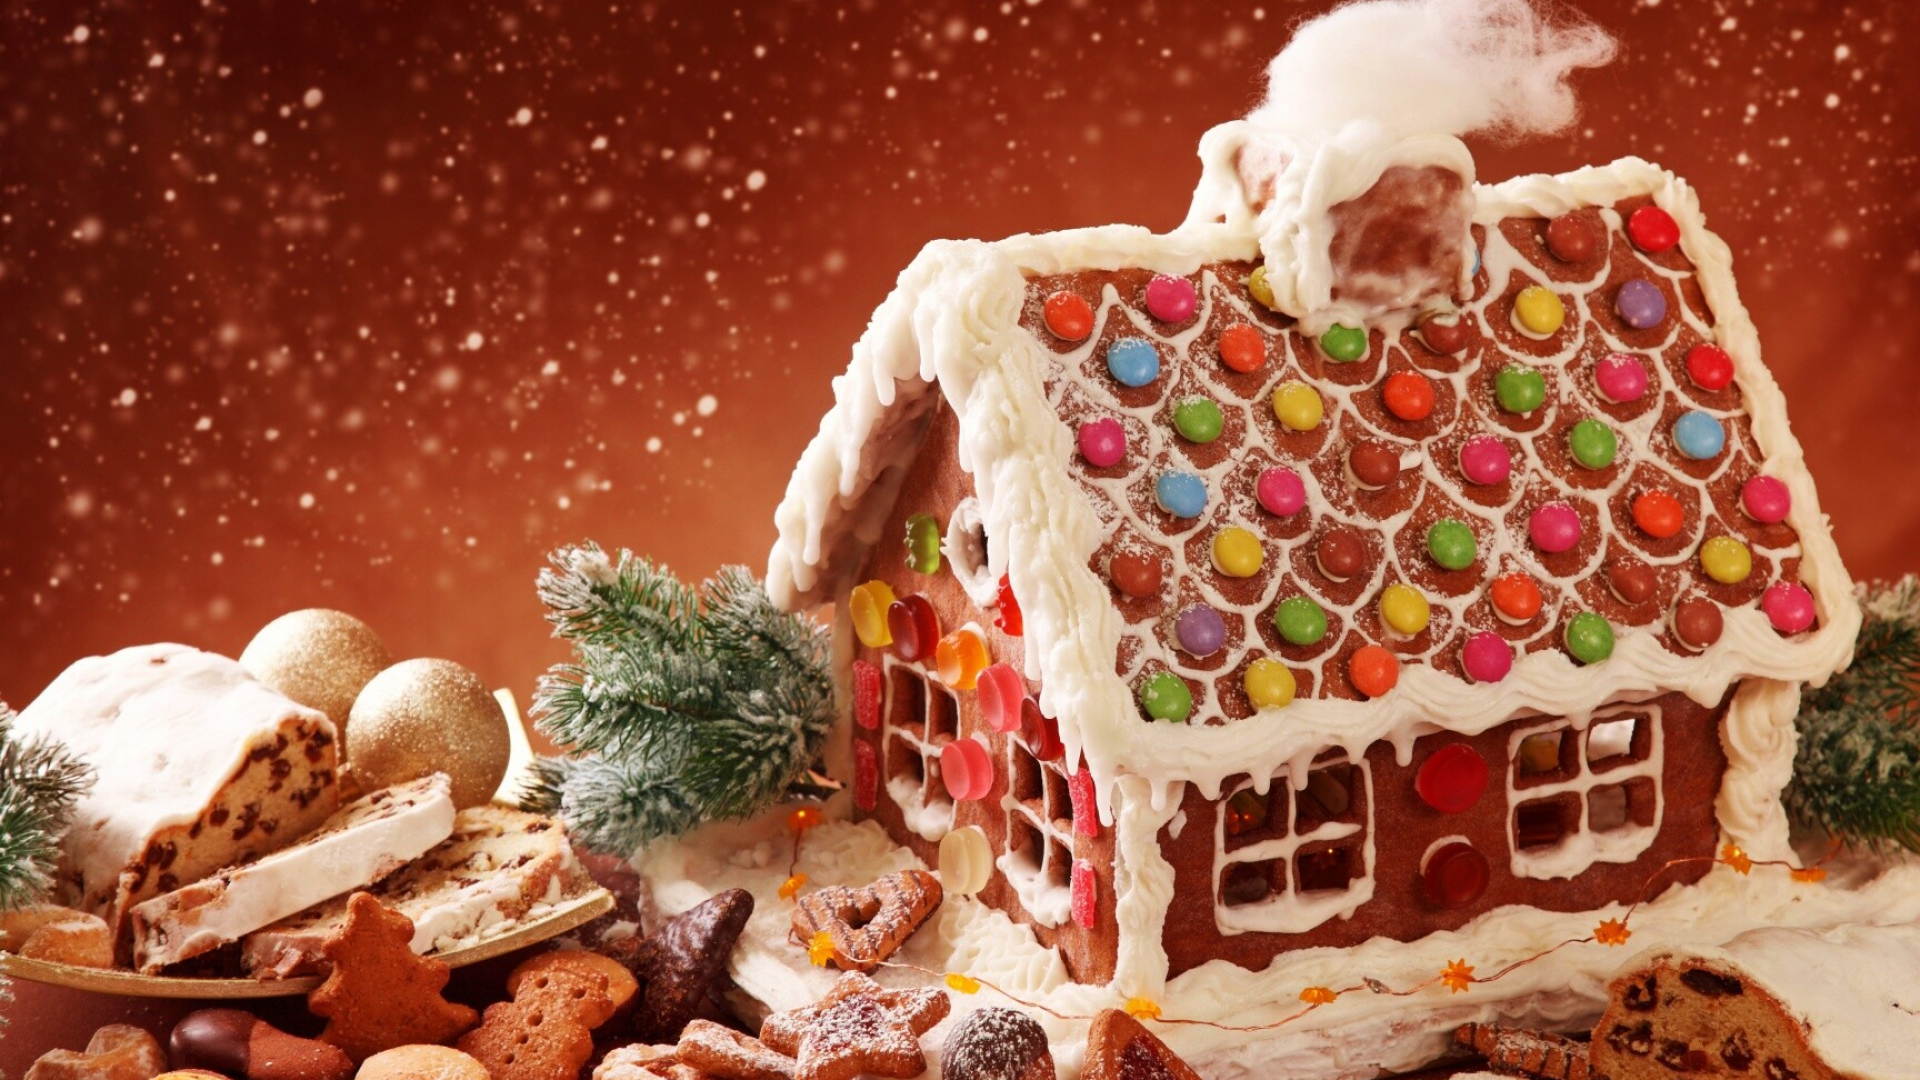 Gingerbread house wallpaper, Festive vibes, Delicious treats, Winter wonderland, 1920x1080 Full HD Desktop